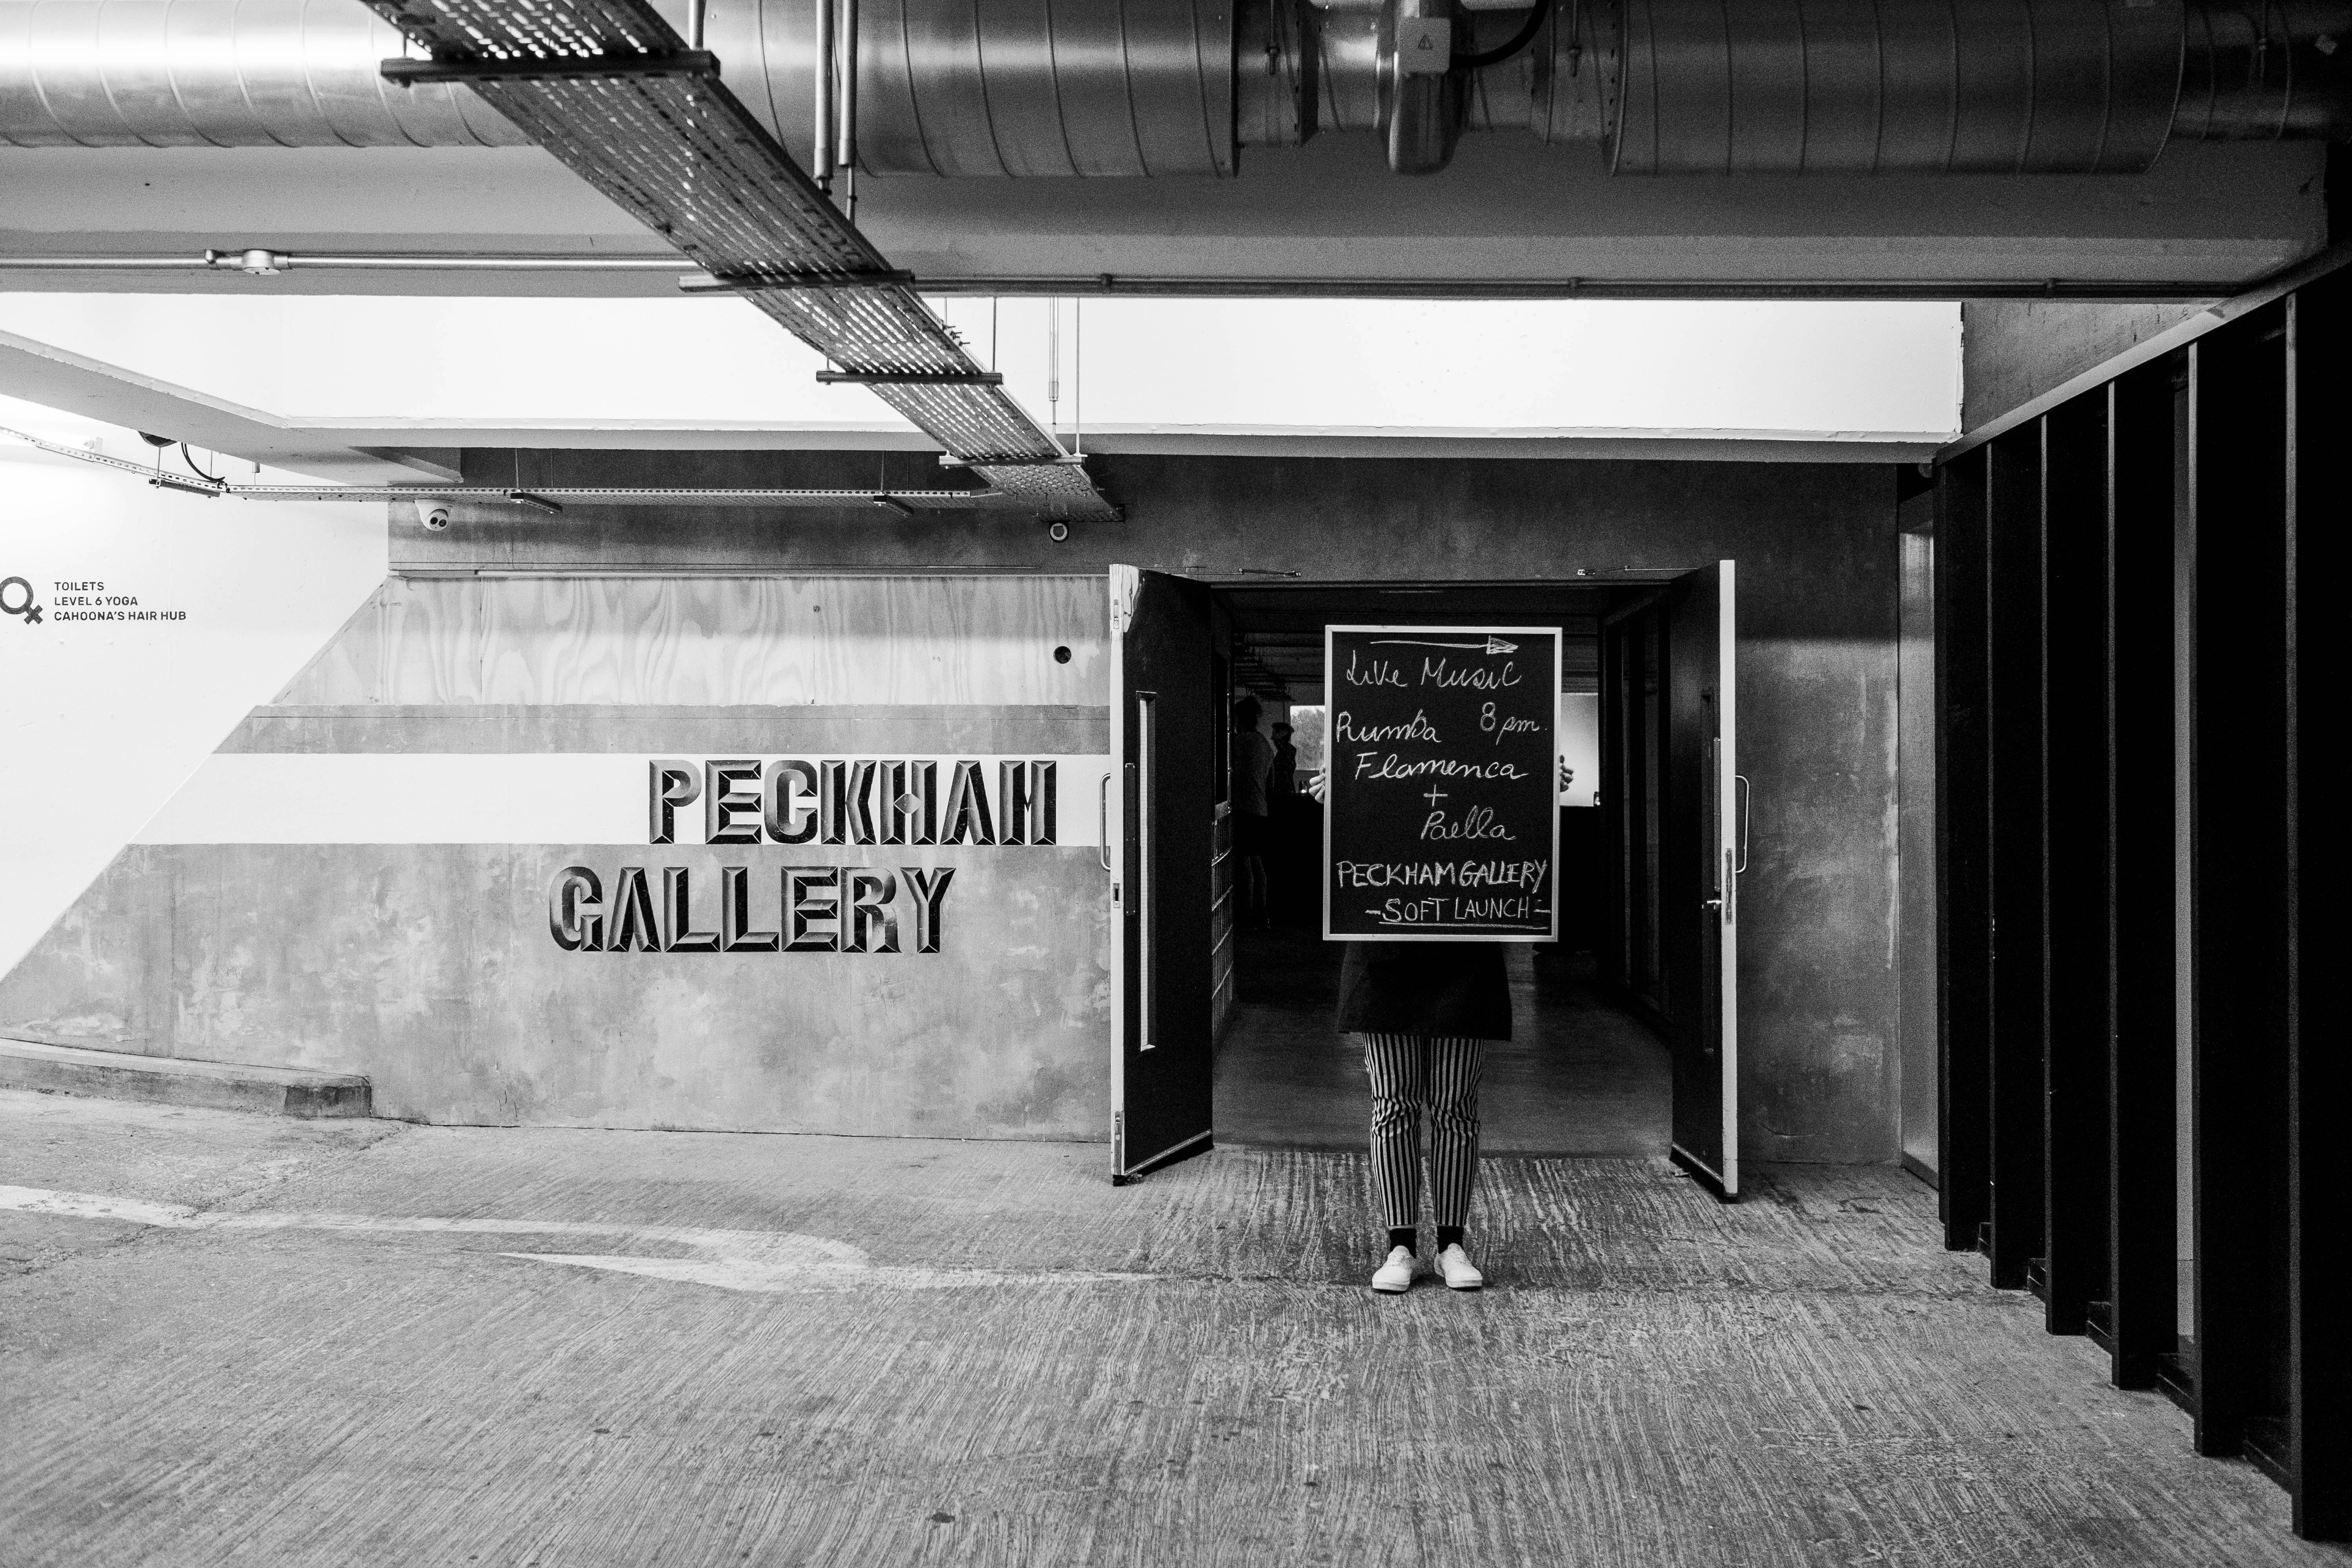 Peckham Gallery - Main Space image 1